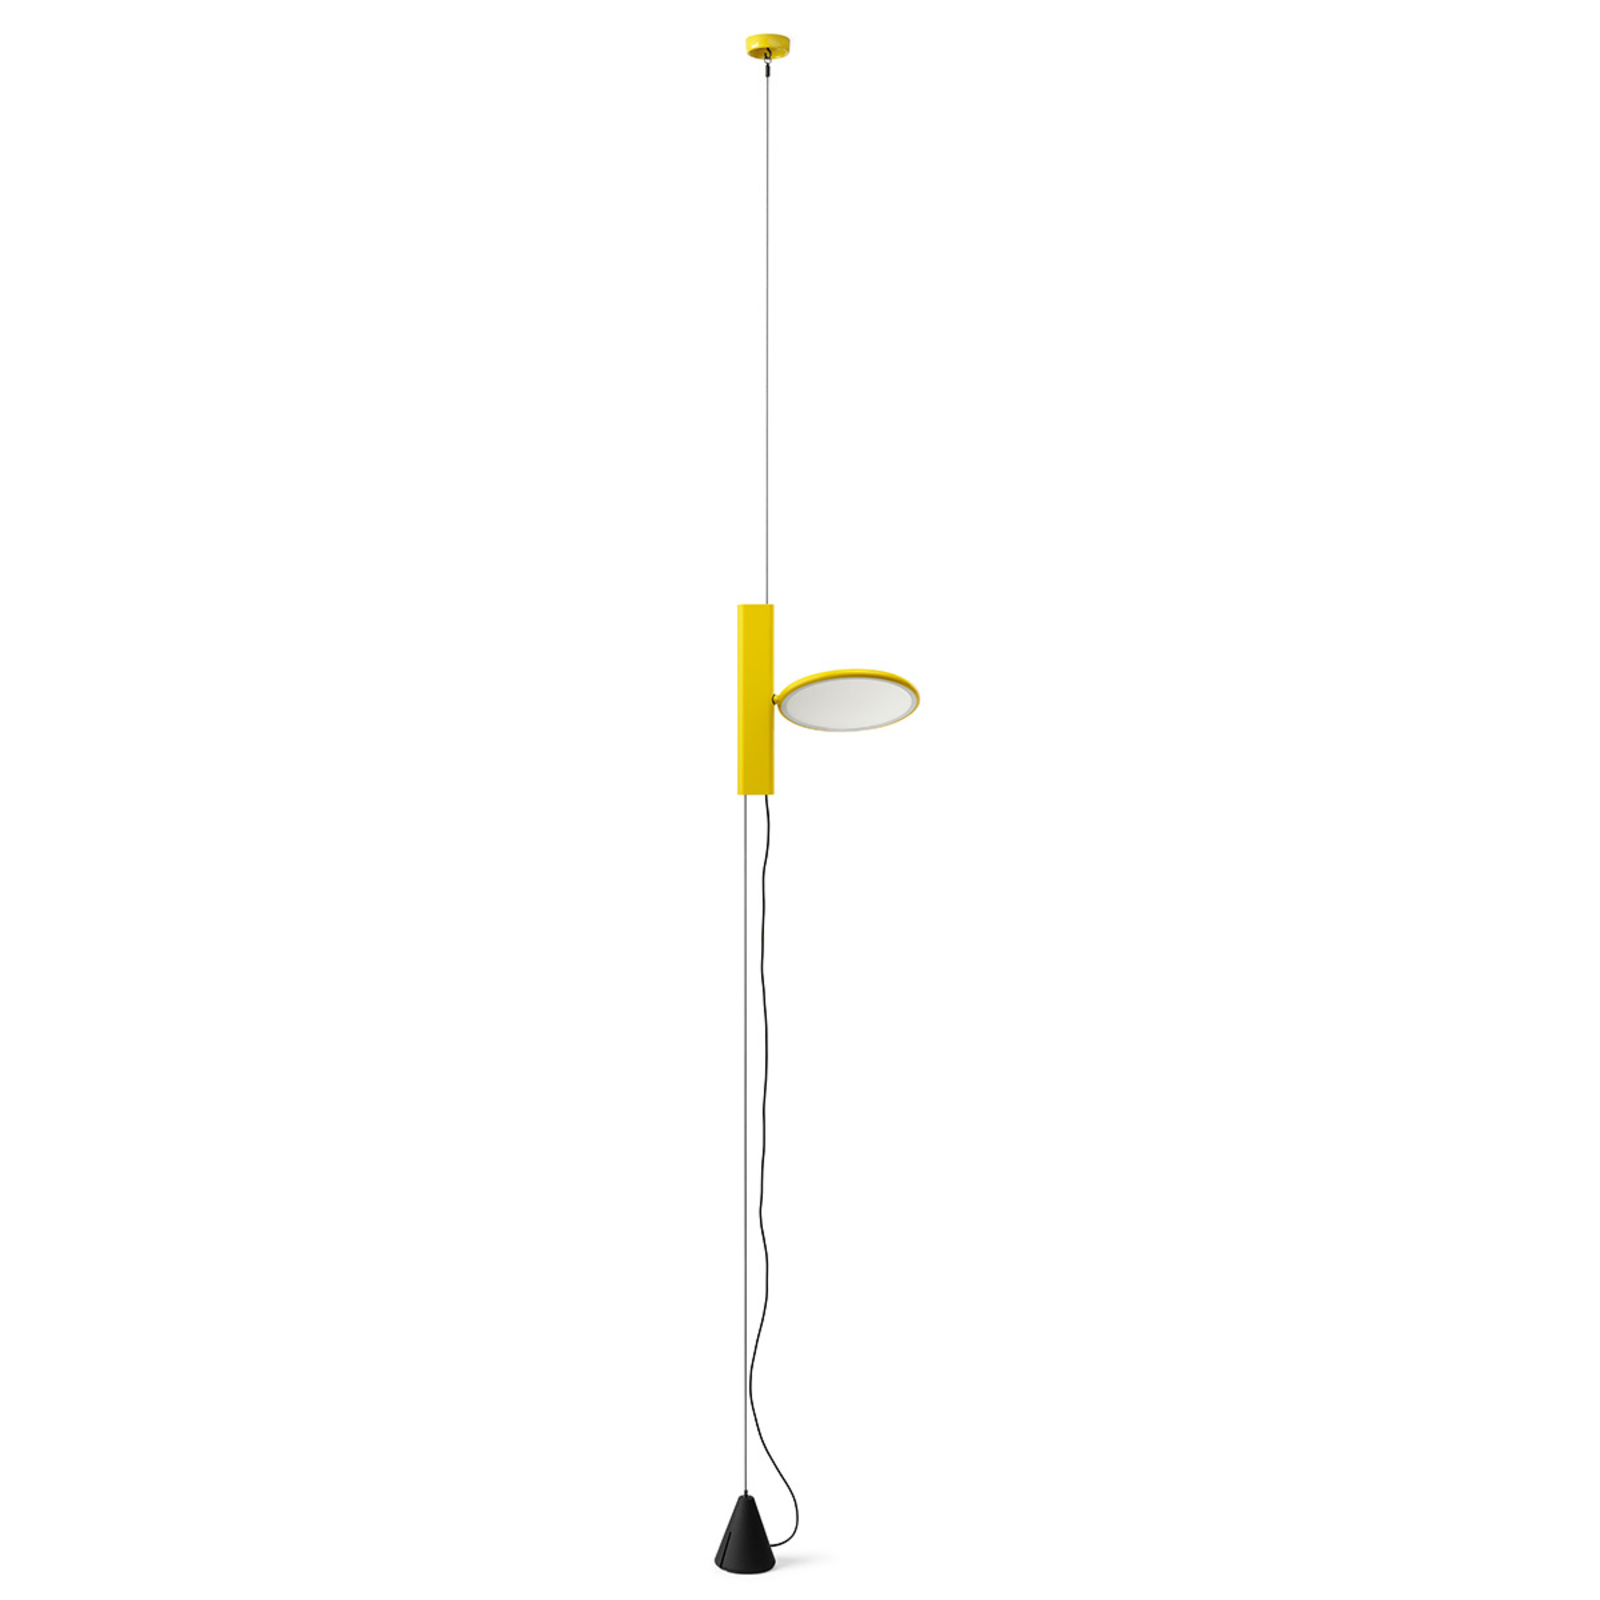 Upright OK LED Pendant Lamp in Yellow